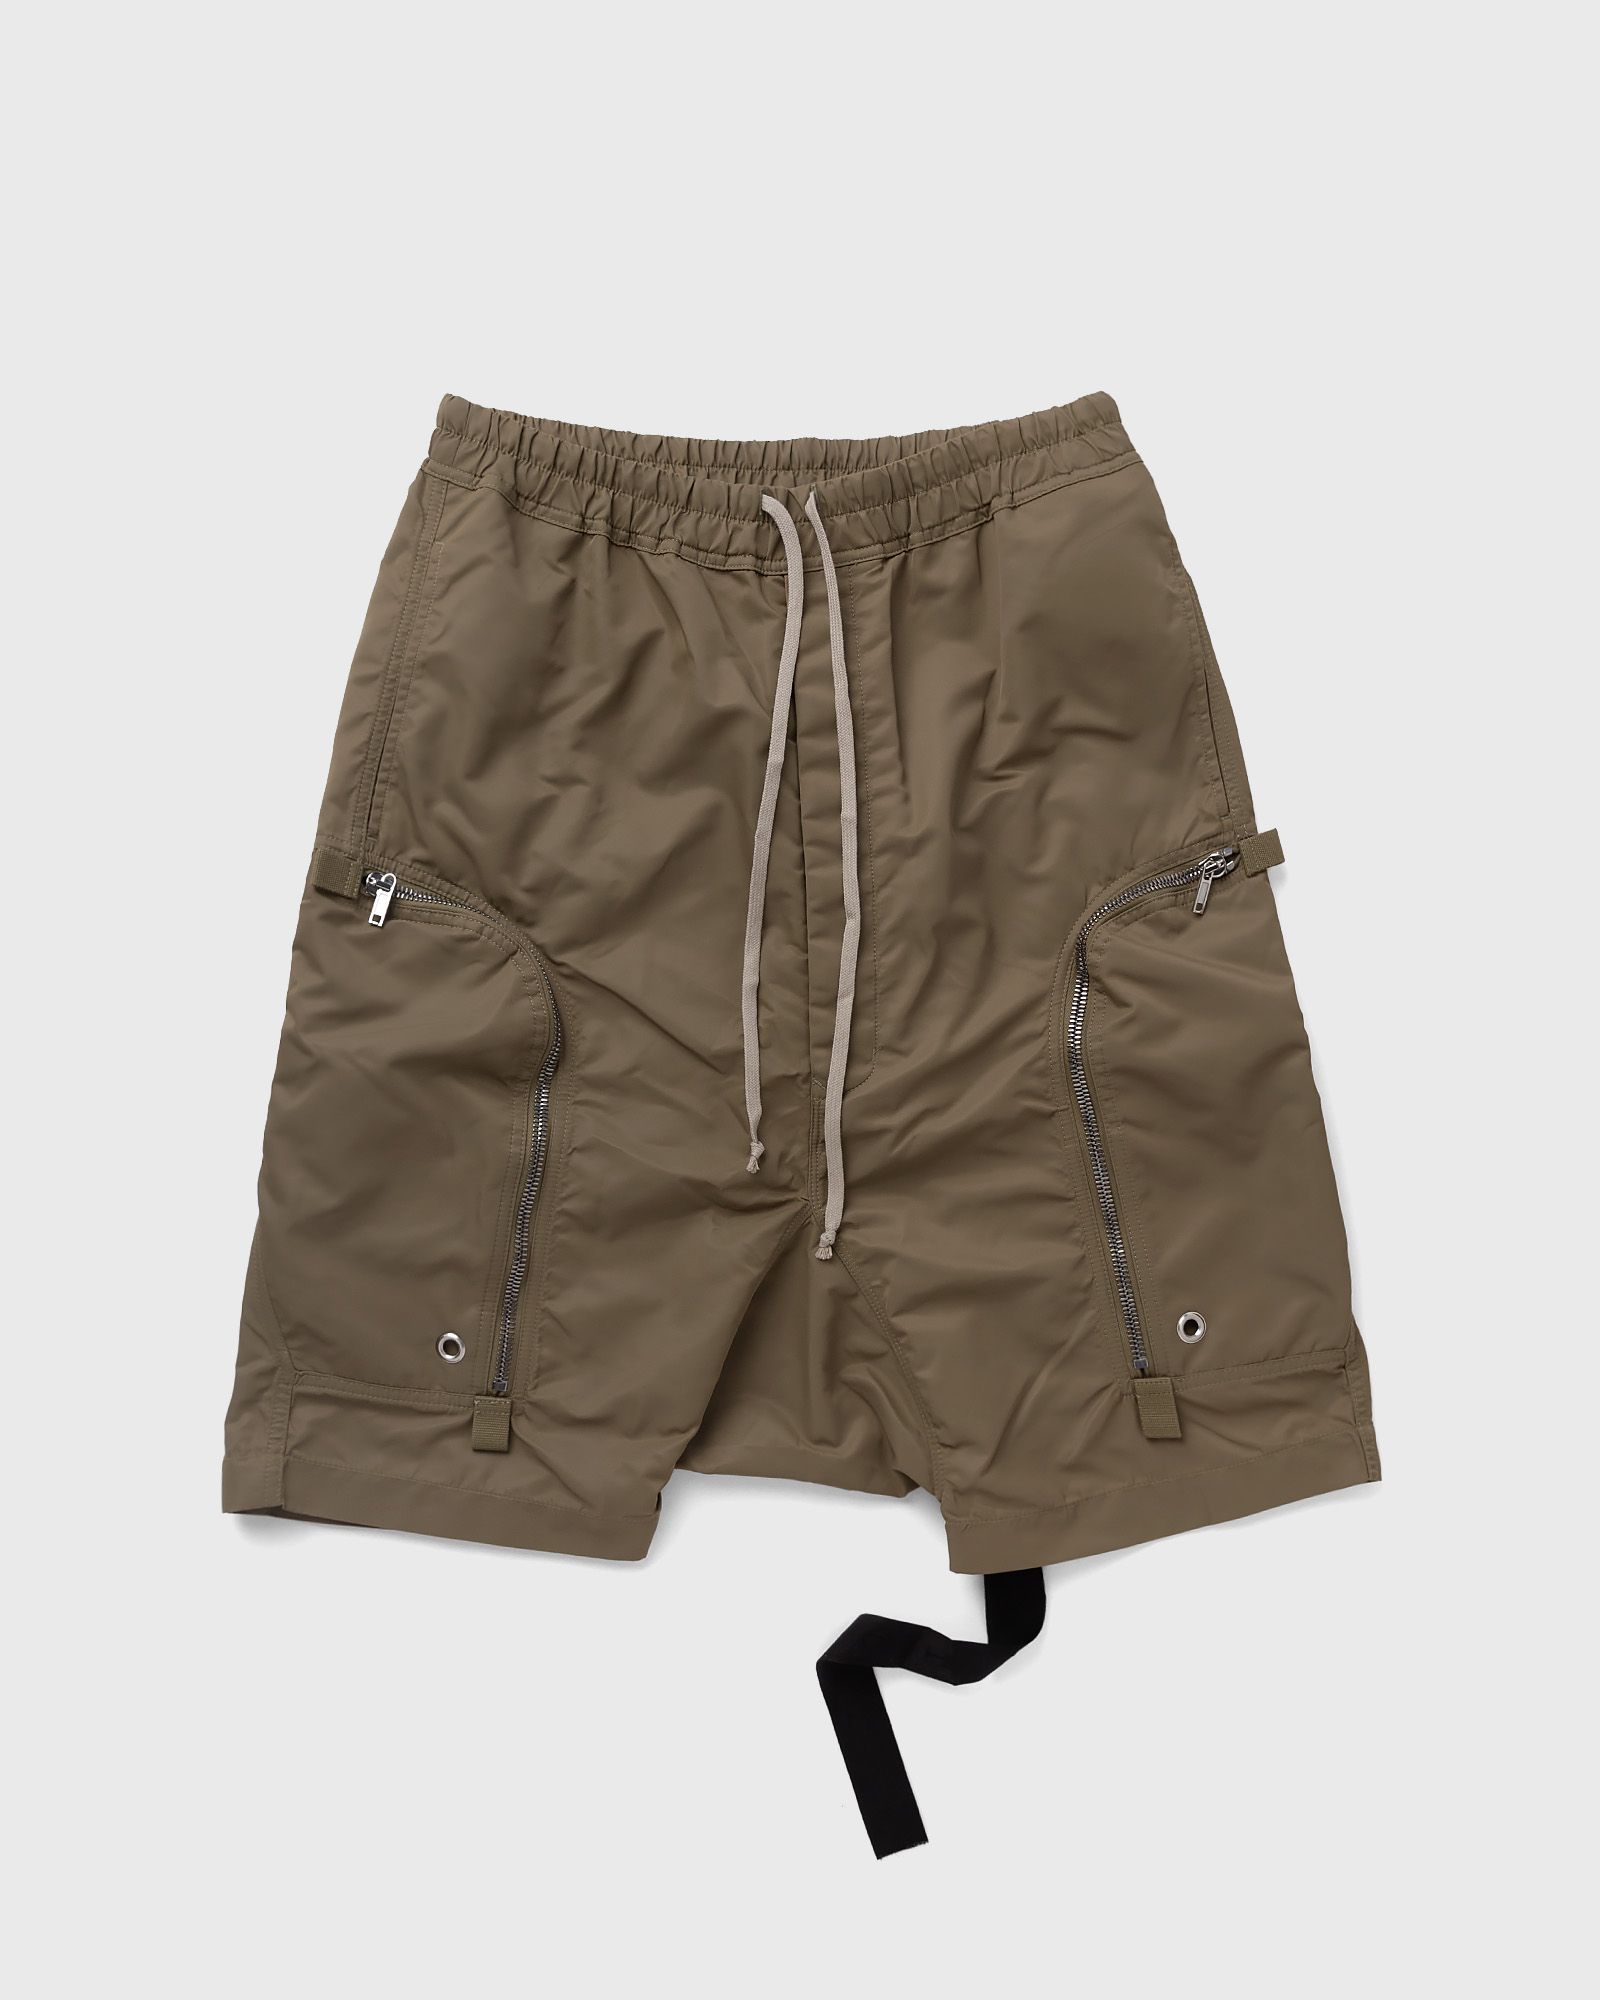 Rick Owens - drkshdw woven shorts - bauhaus shorts men cargo shorts green in größe:l